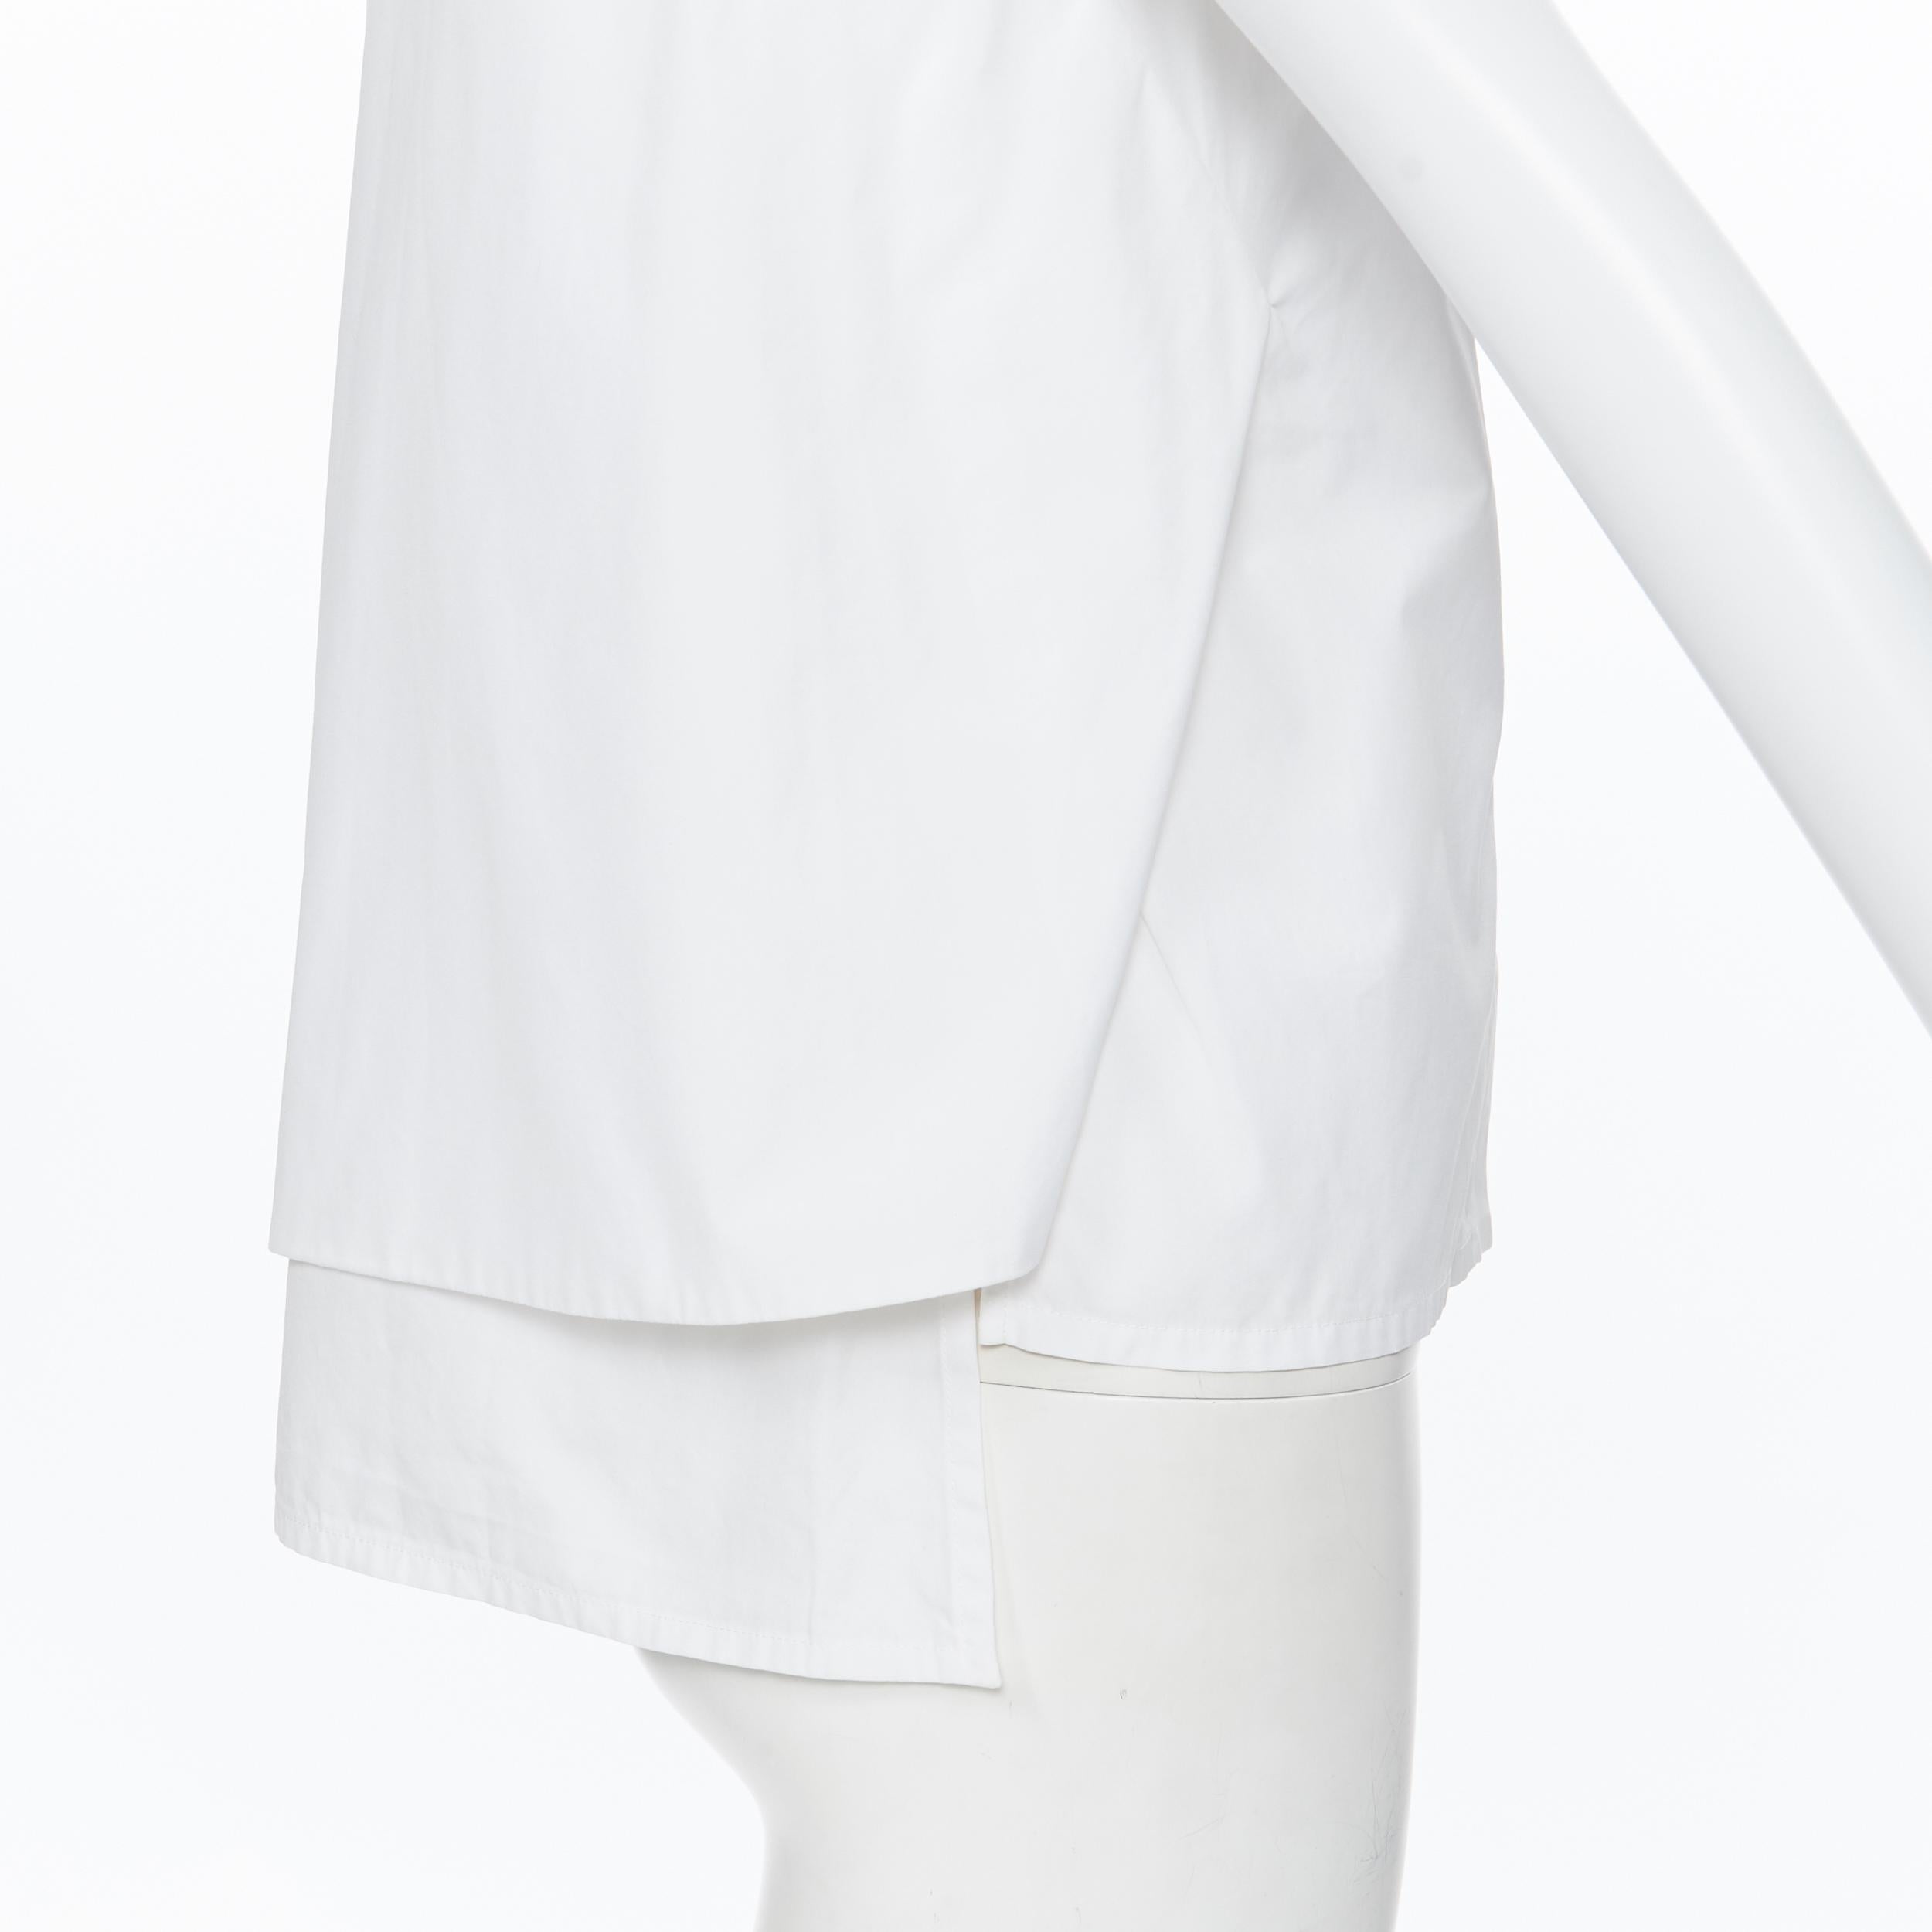 PETER PILOTTO white cotton embroidery anglais paneled panel sleeveless shirt S 3